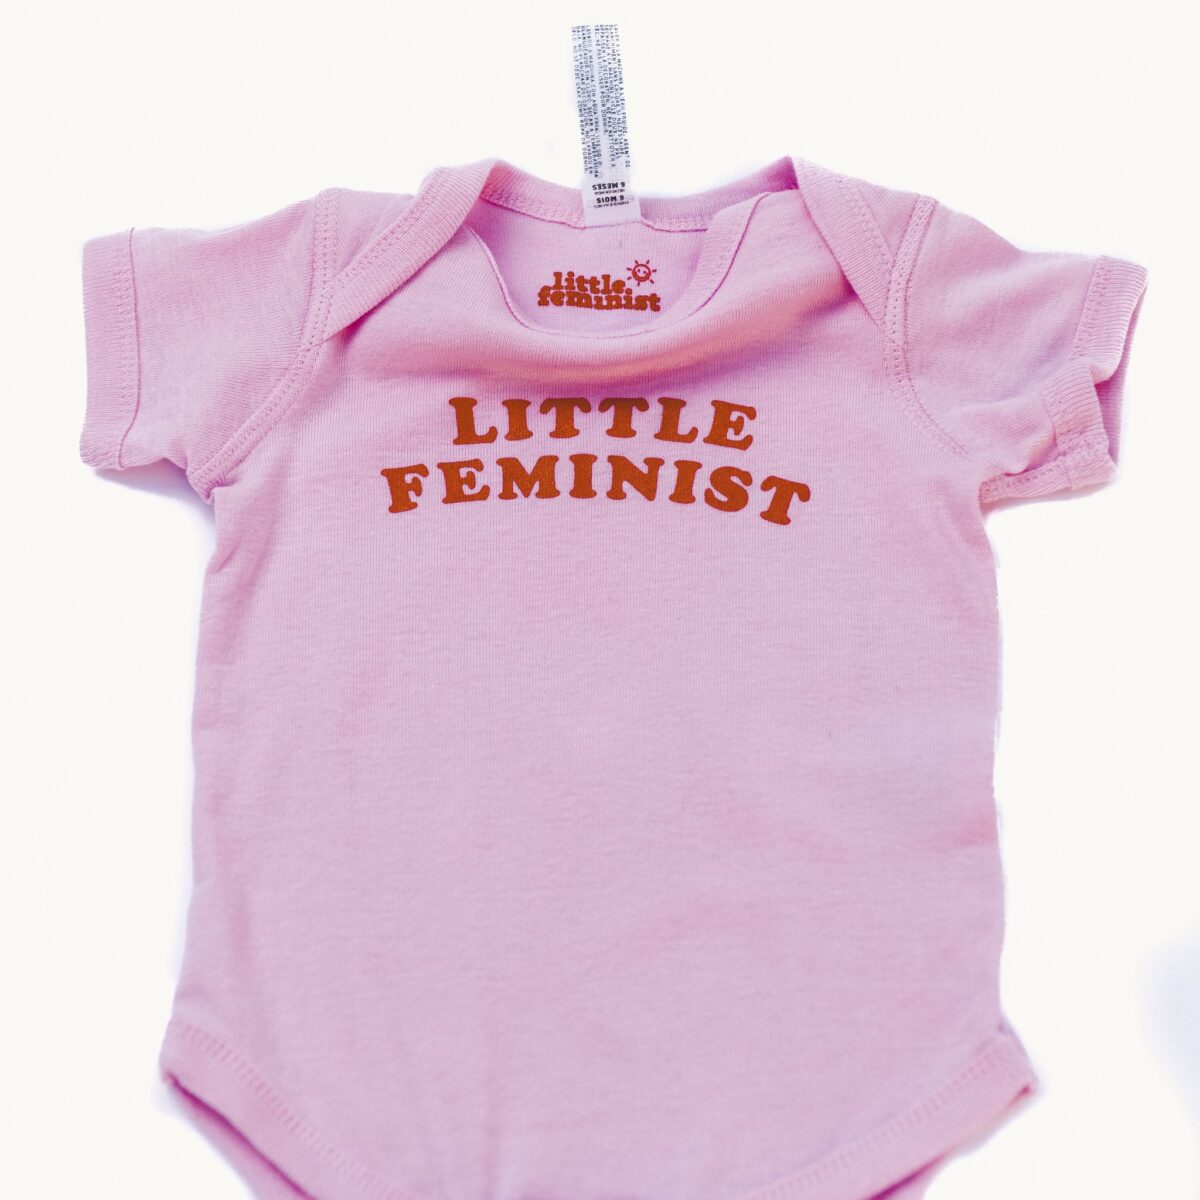 Little Feminist pink onesie inside label